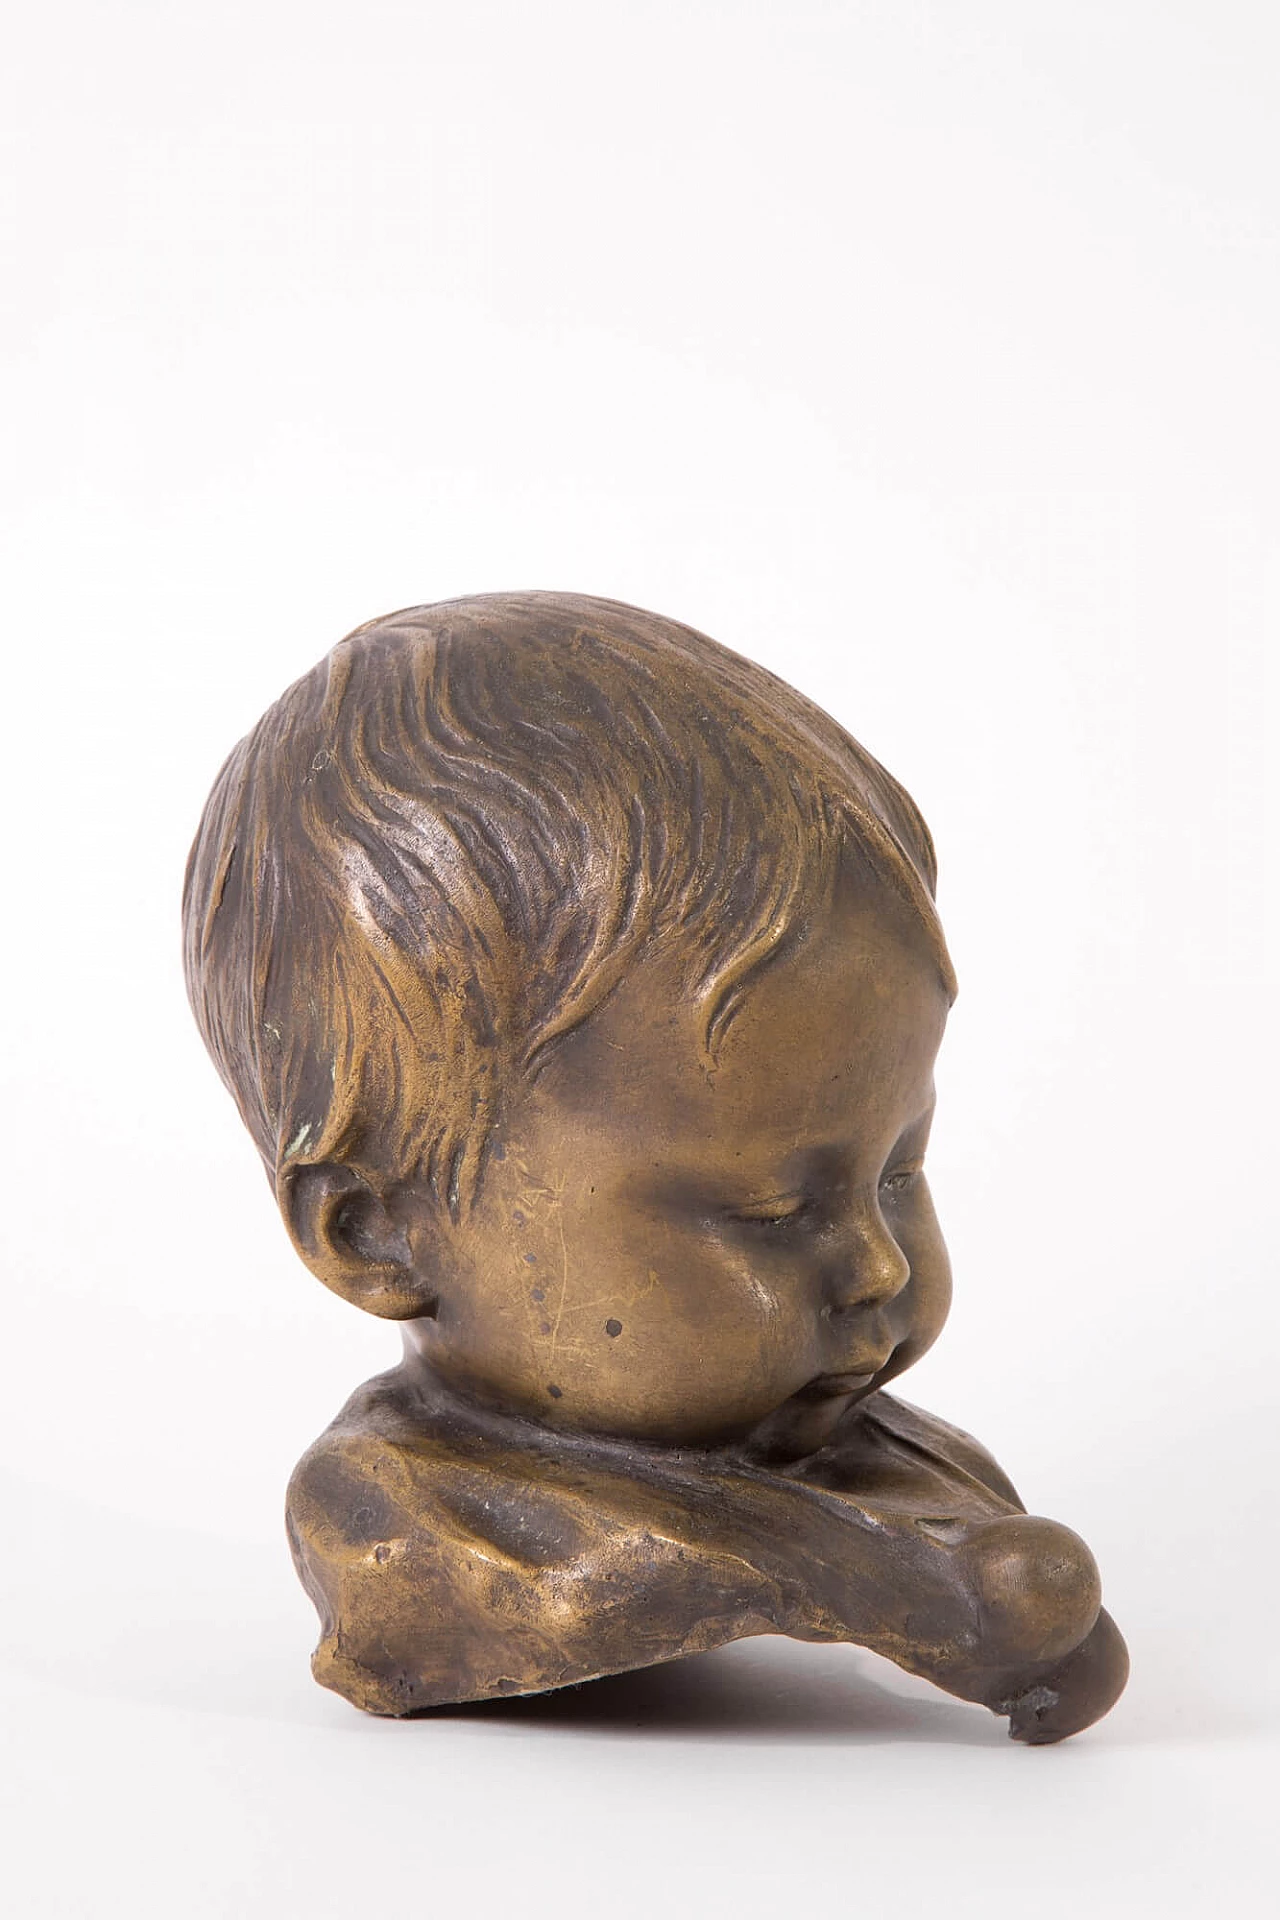 Bernardo Balestrieri, child's head, bronze sculpture 2